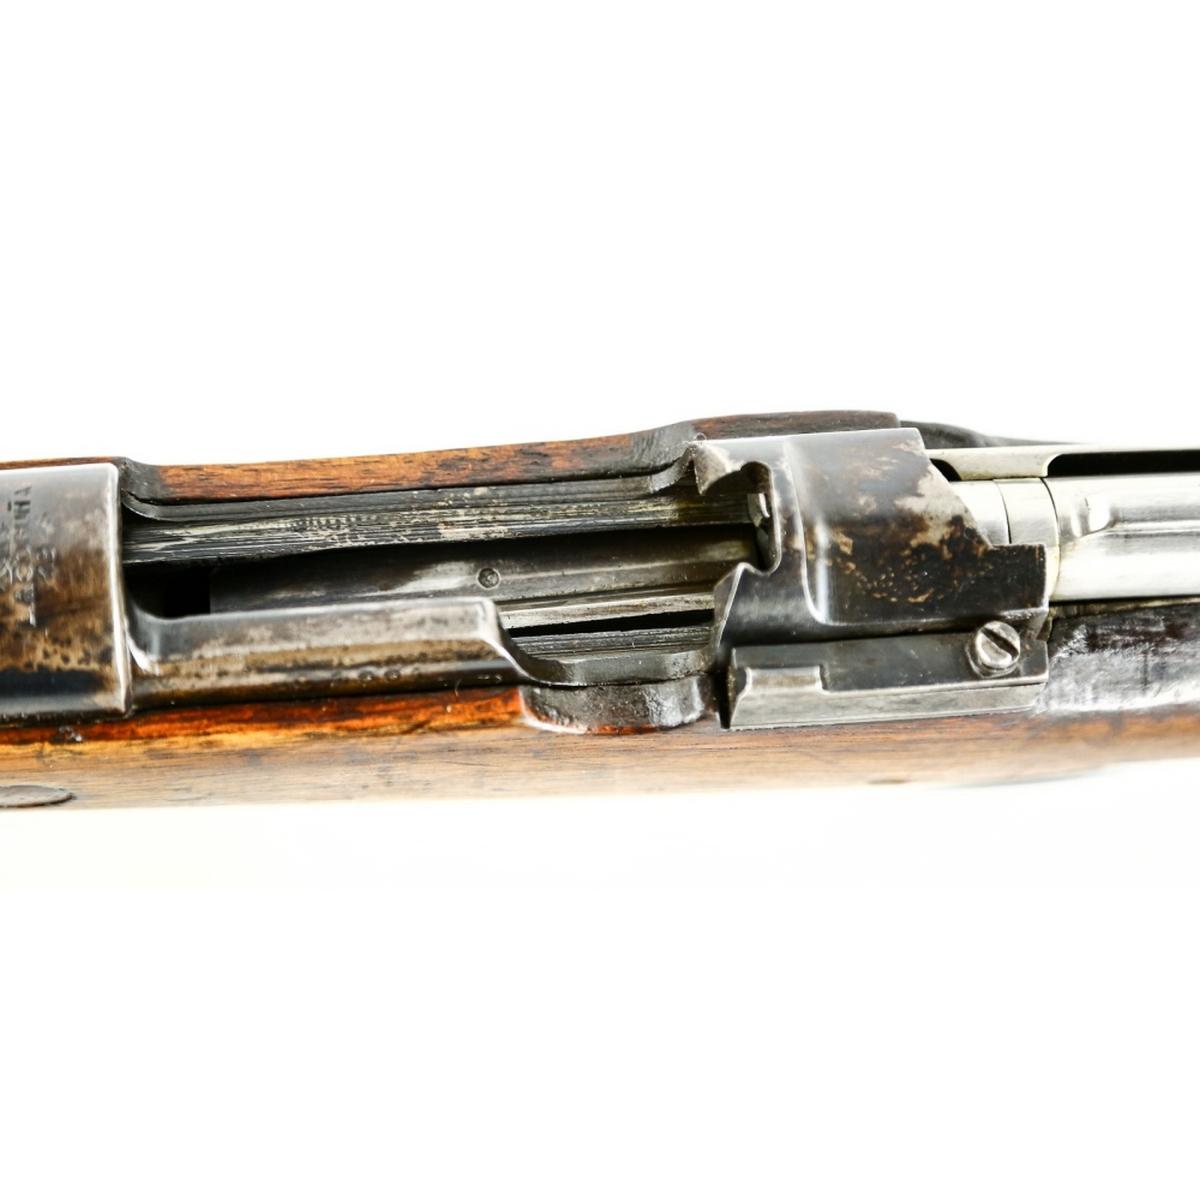 Spain Model 1943 Rifle 7.92x57mm